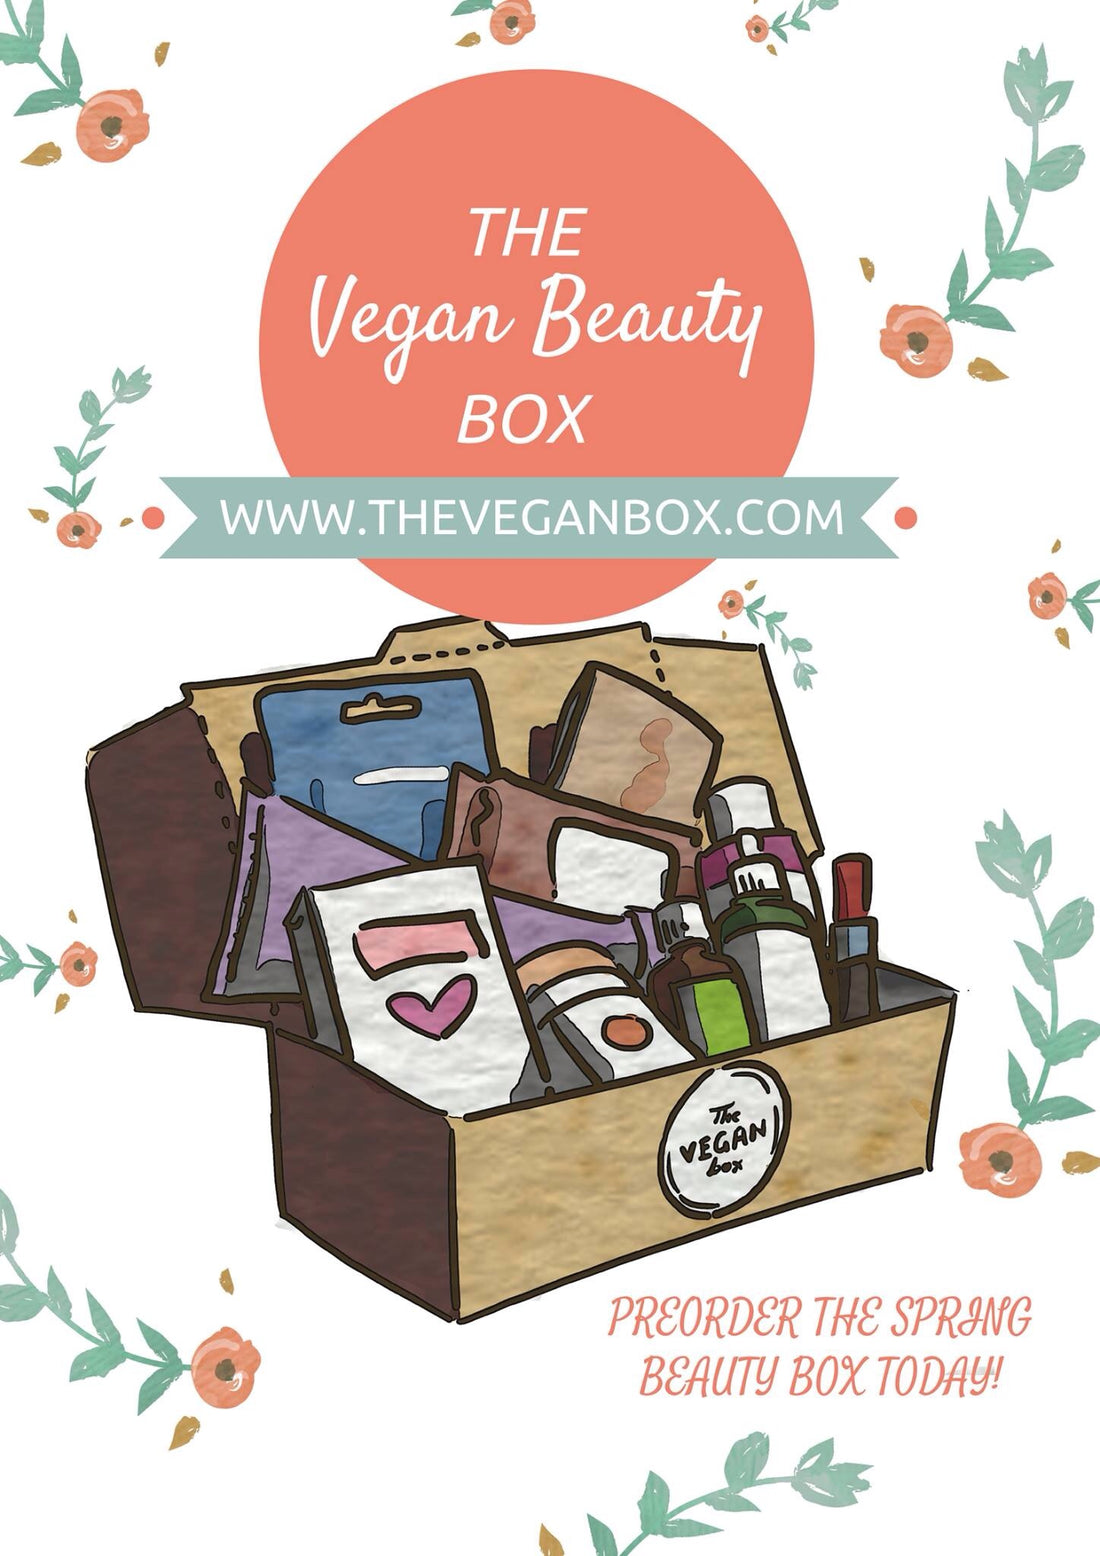 The Spring Vegan Beauty Box